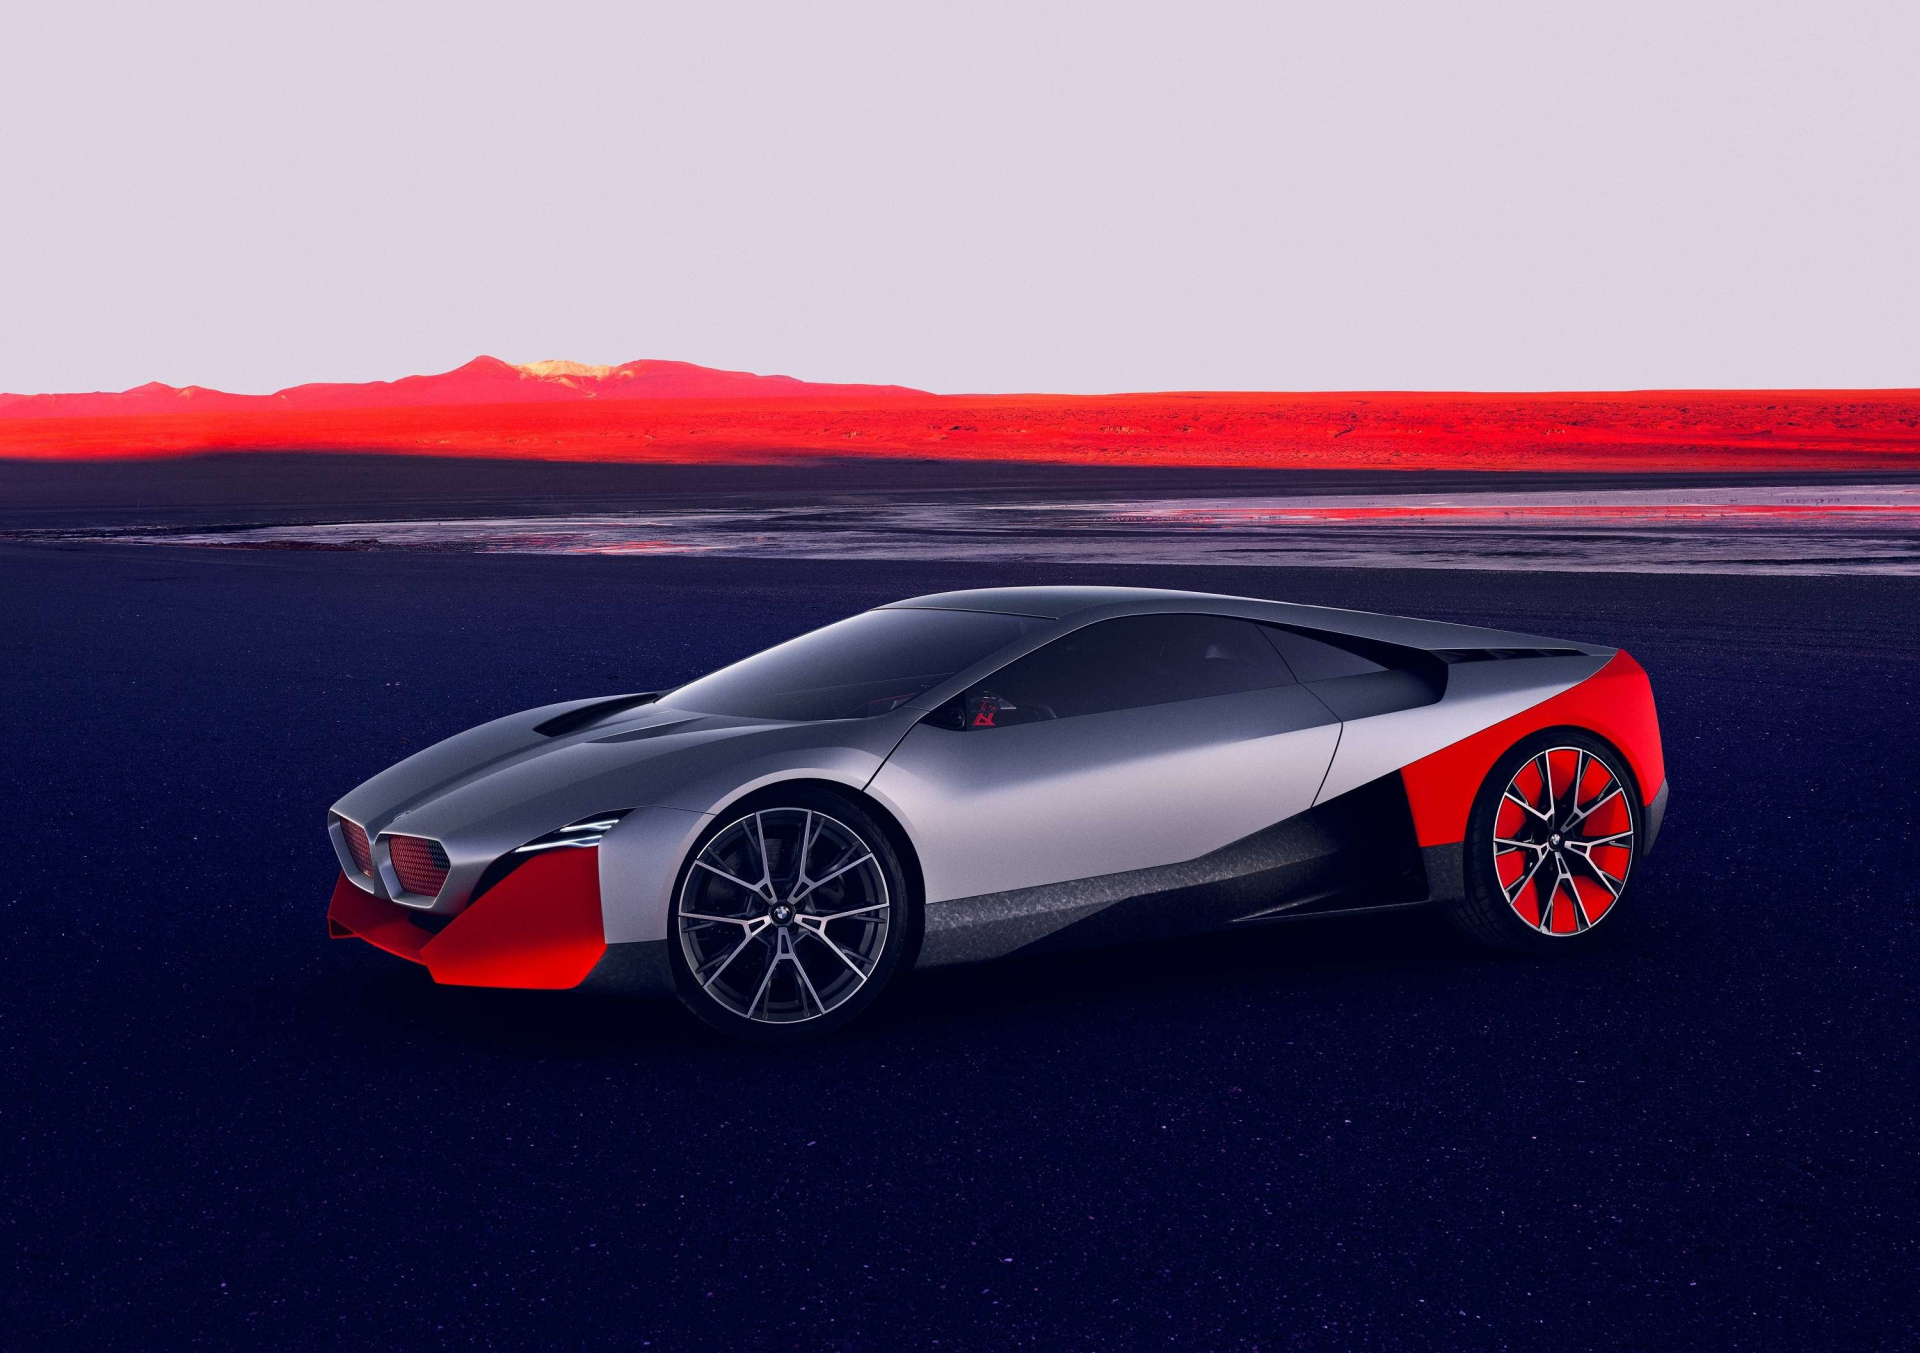 BMW’nin Fütüristik Otomobili: Vision M Next